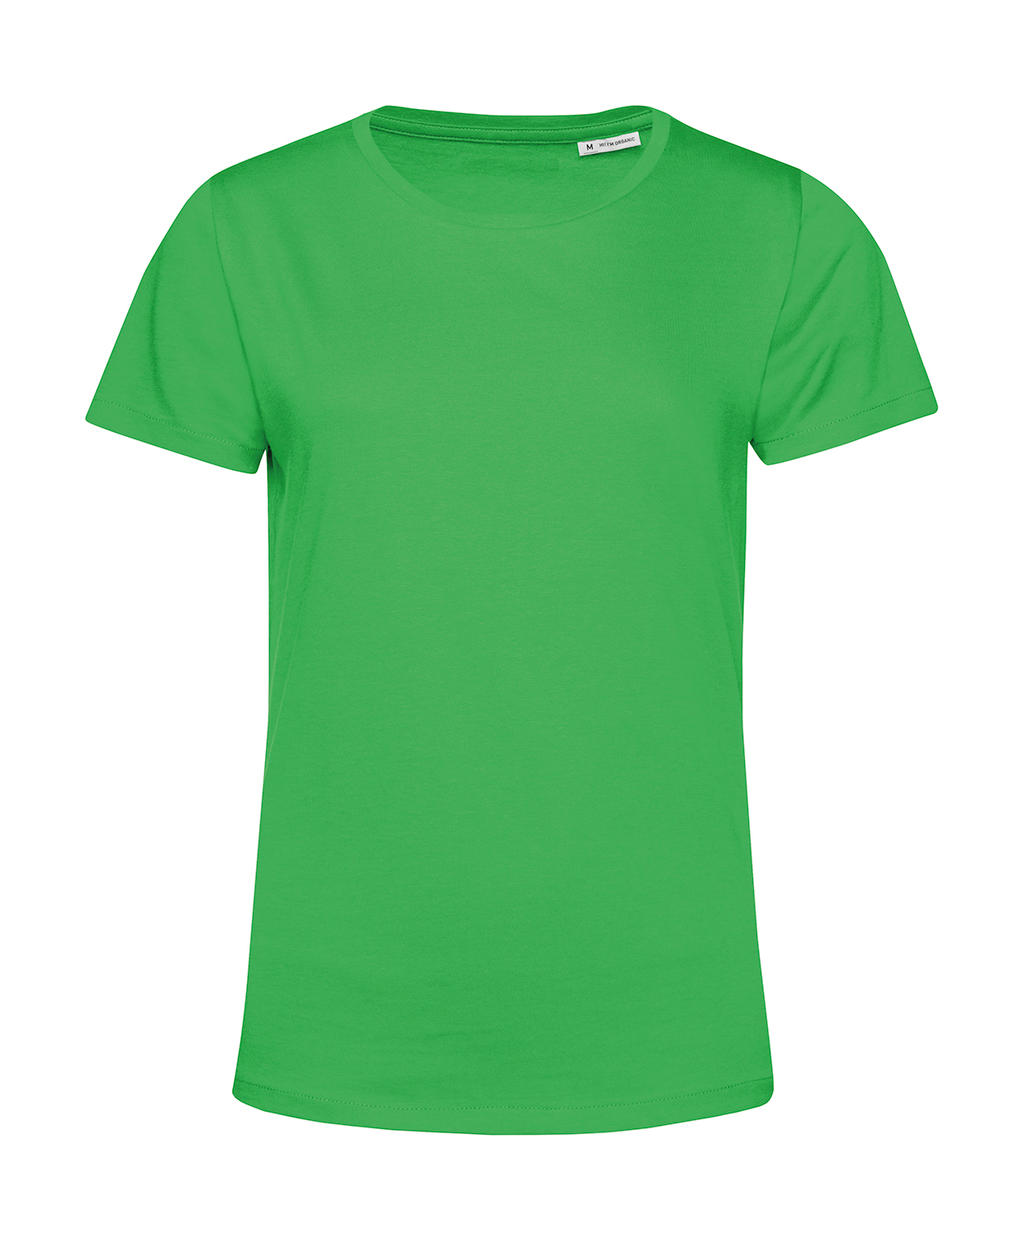 Tričko dámské BC Organic Inspire E150 - zelené, S